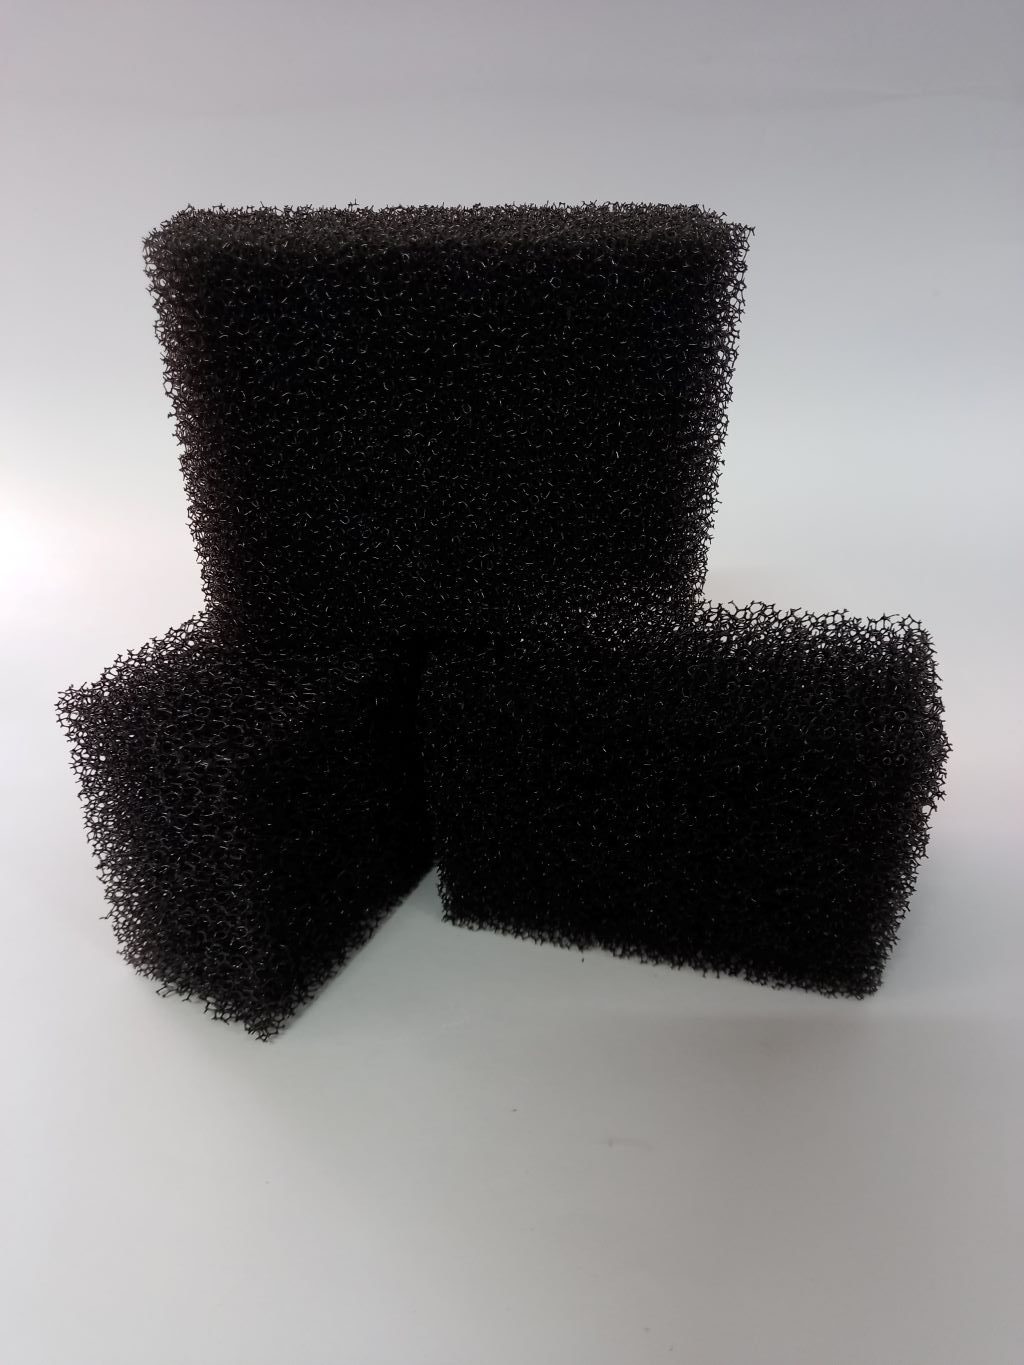 Exfoliating Black body sponge 3 + 1 - iBeauty